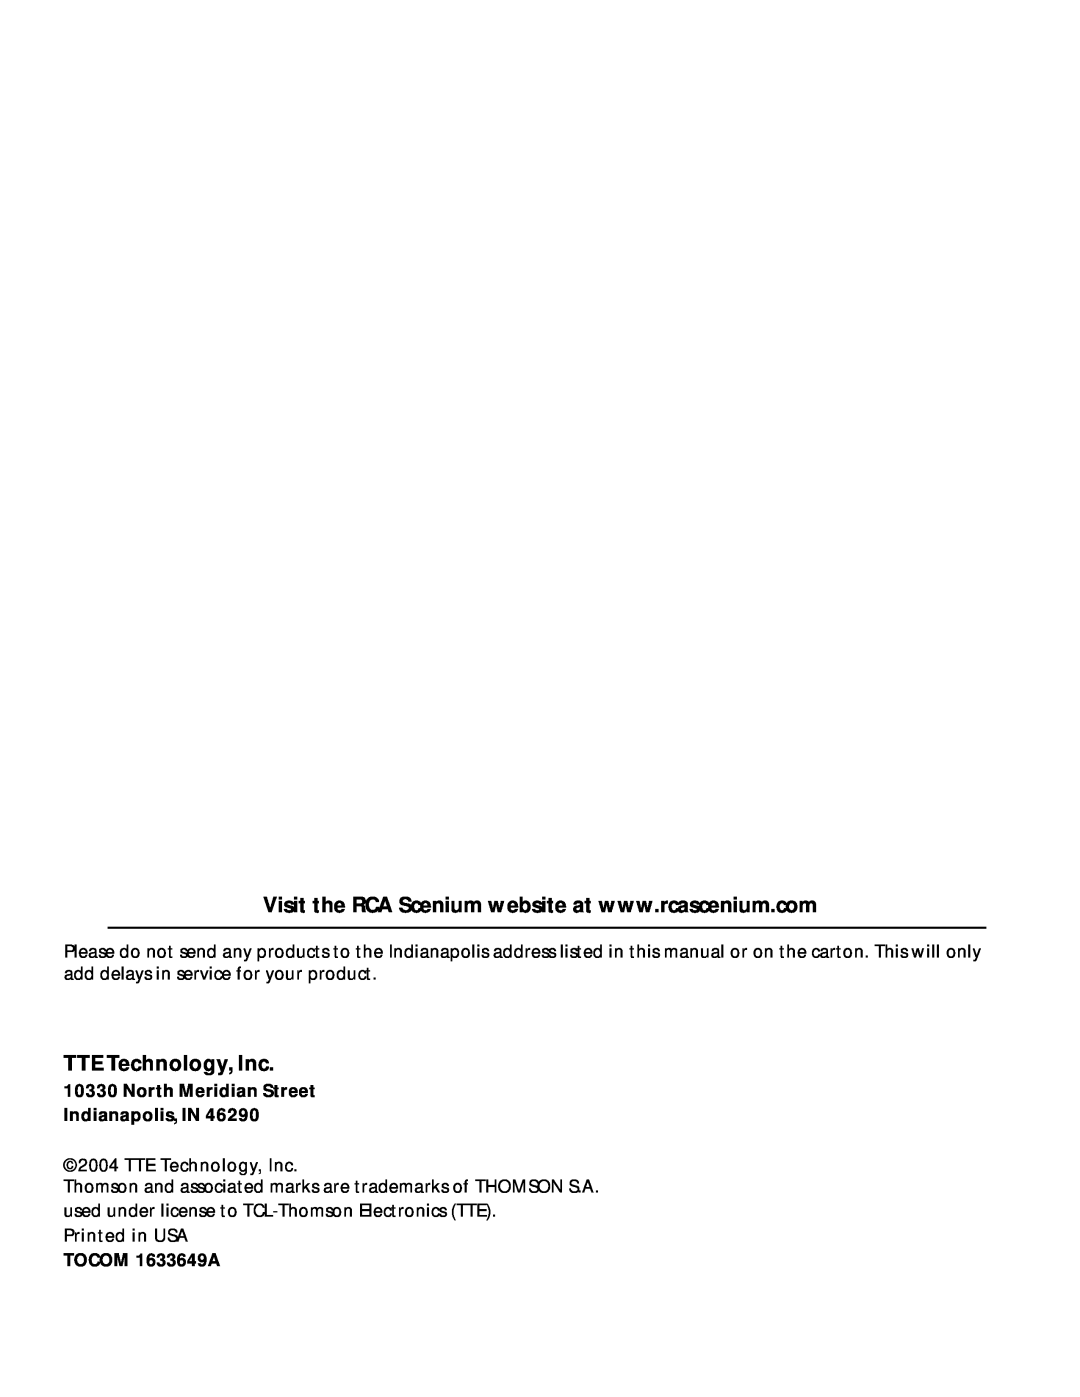 RCA scenium manual TTE Technology, Inc, TOCOM 1633649A 